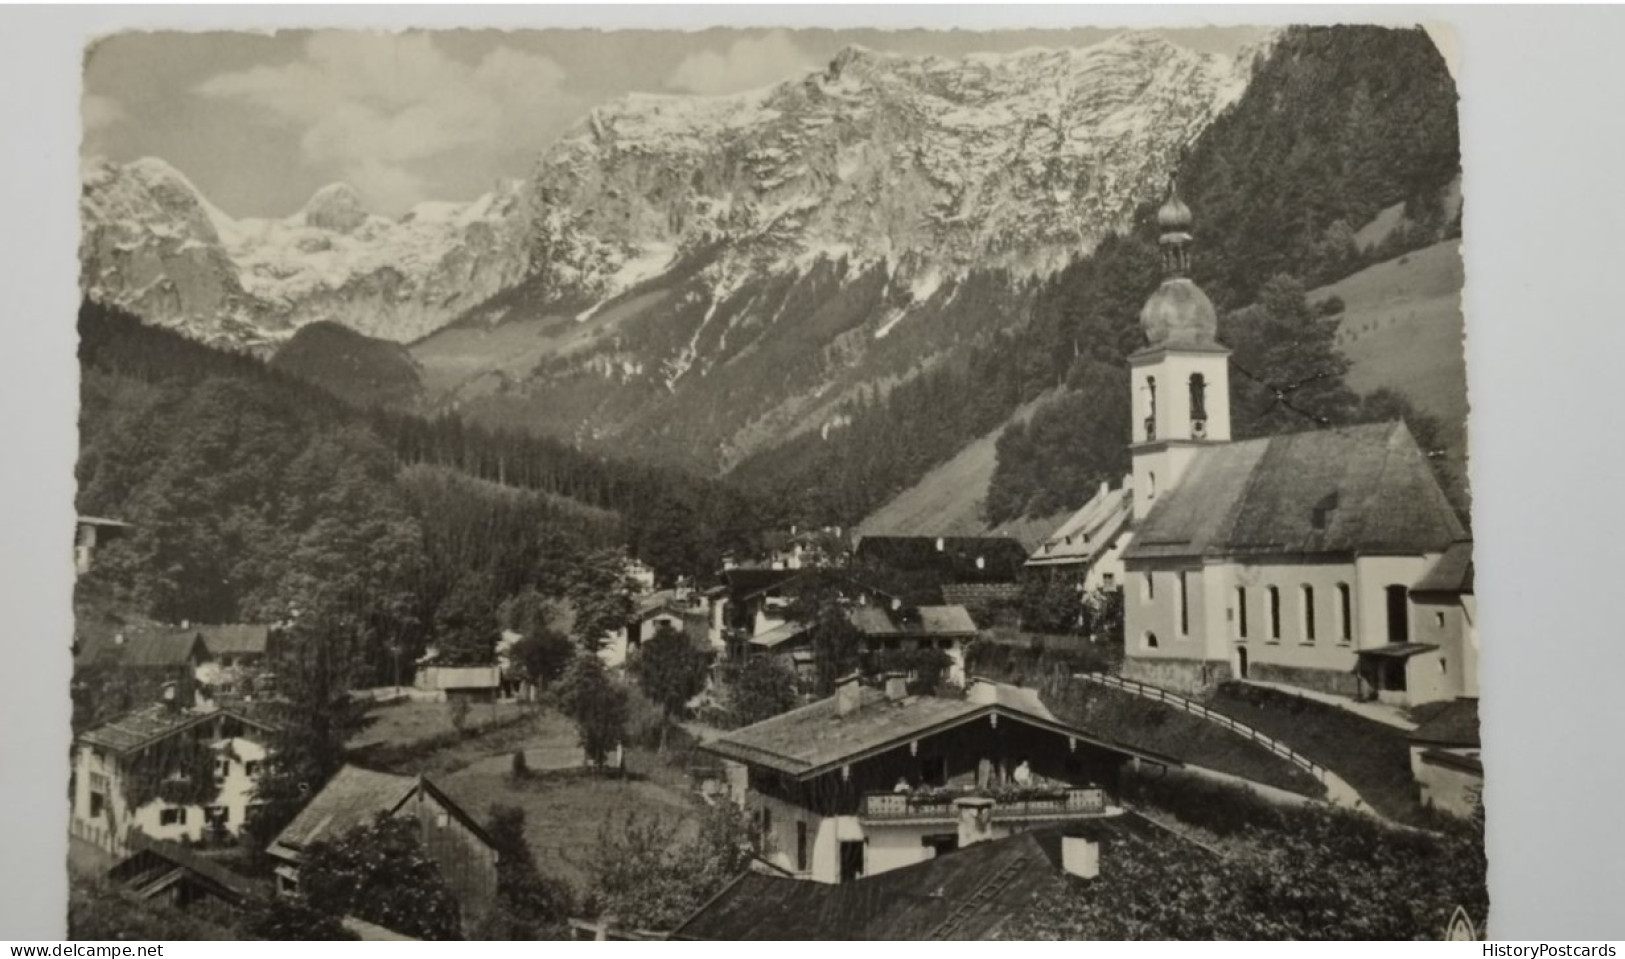 Ramsau, Dorfkirche, Panorama, Berchtesgaden, 1960 - Berchtesgaden